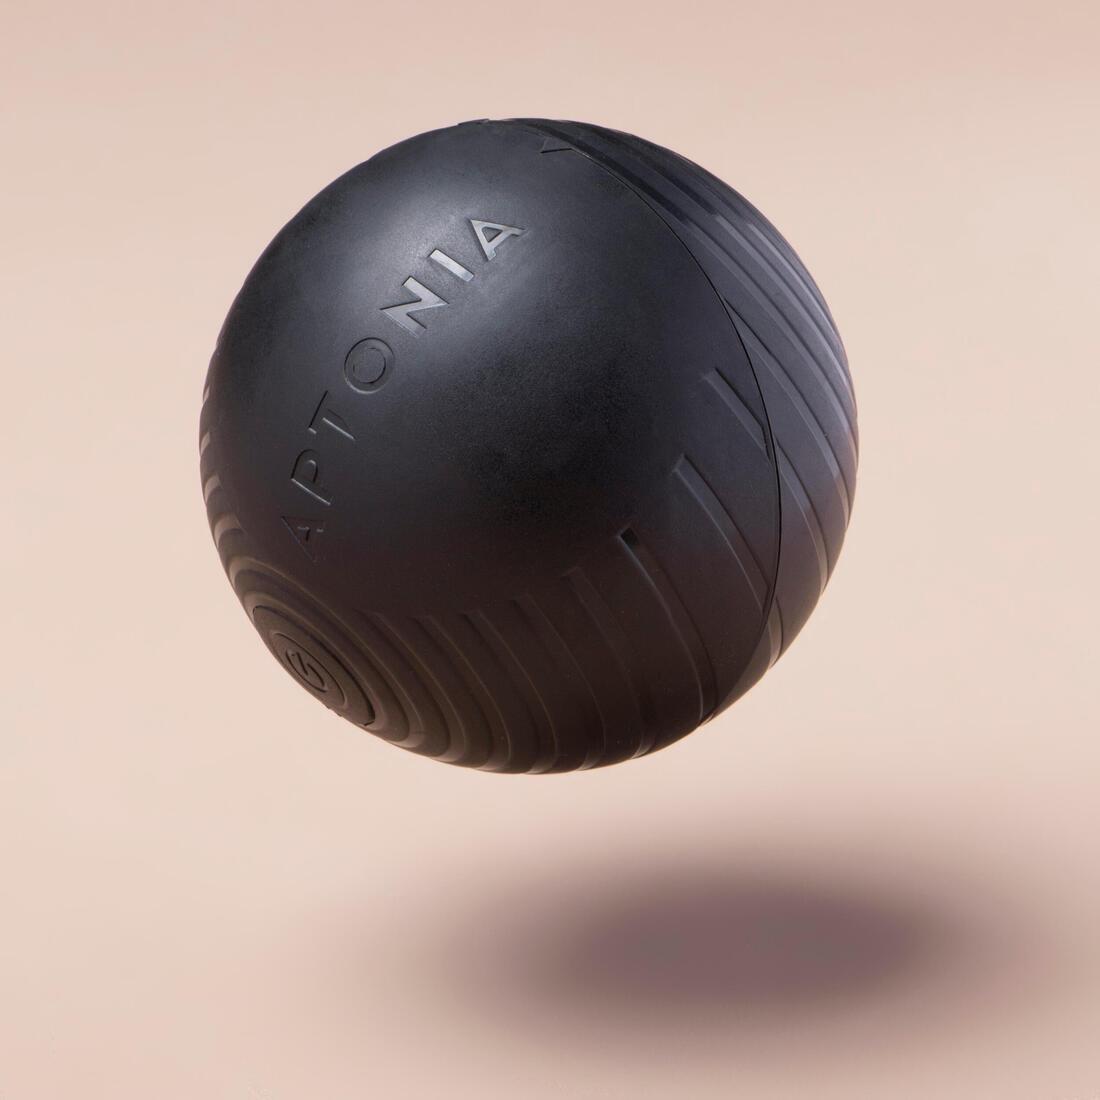 DECATHLON - Electronic Vibrating Massage Ball 900